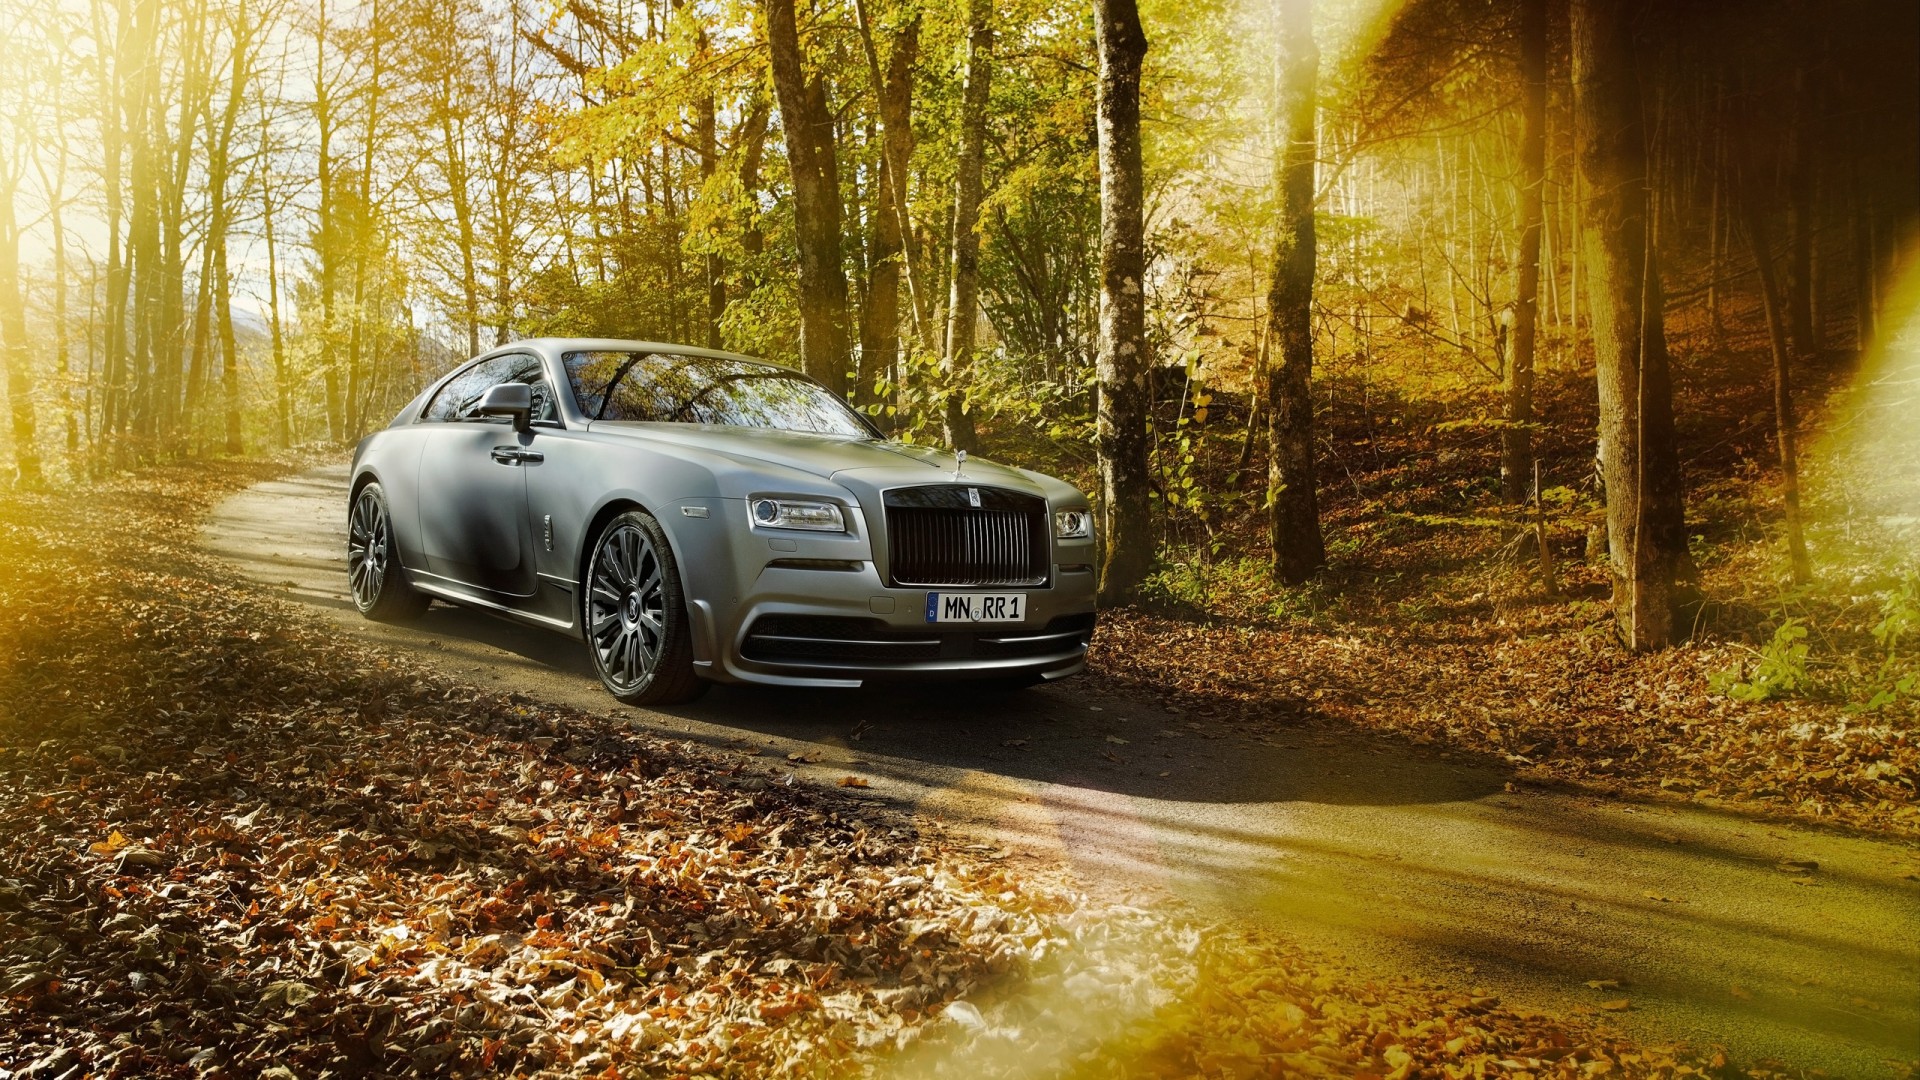 2014 Spofec Rolls Royce Wraith Wallpaper | HD Car Wallpapers | ID #4988